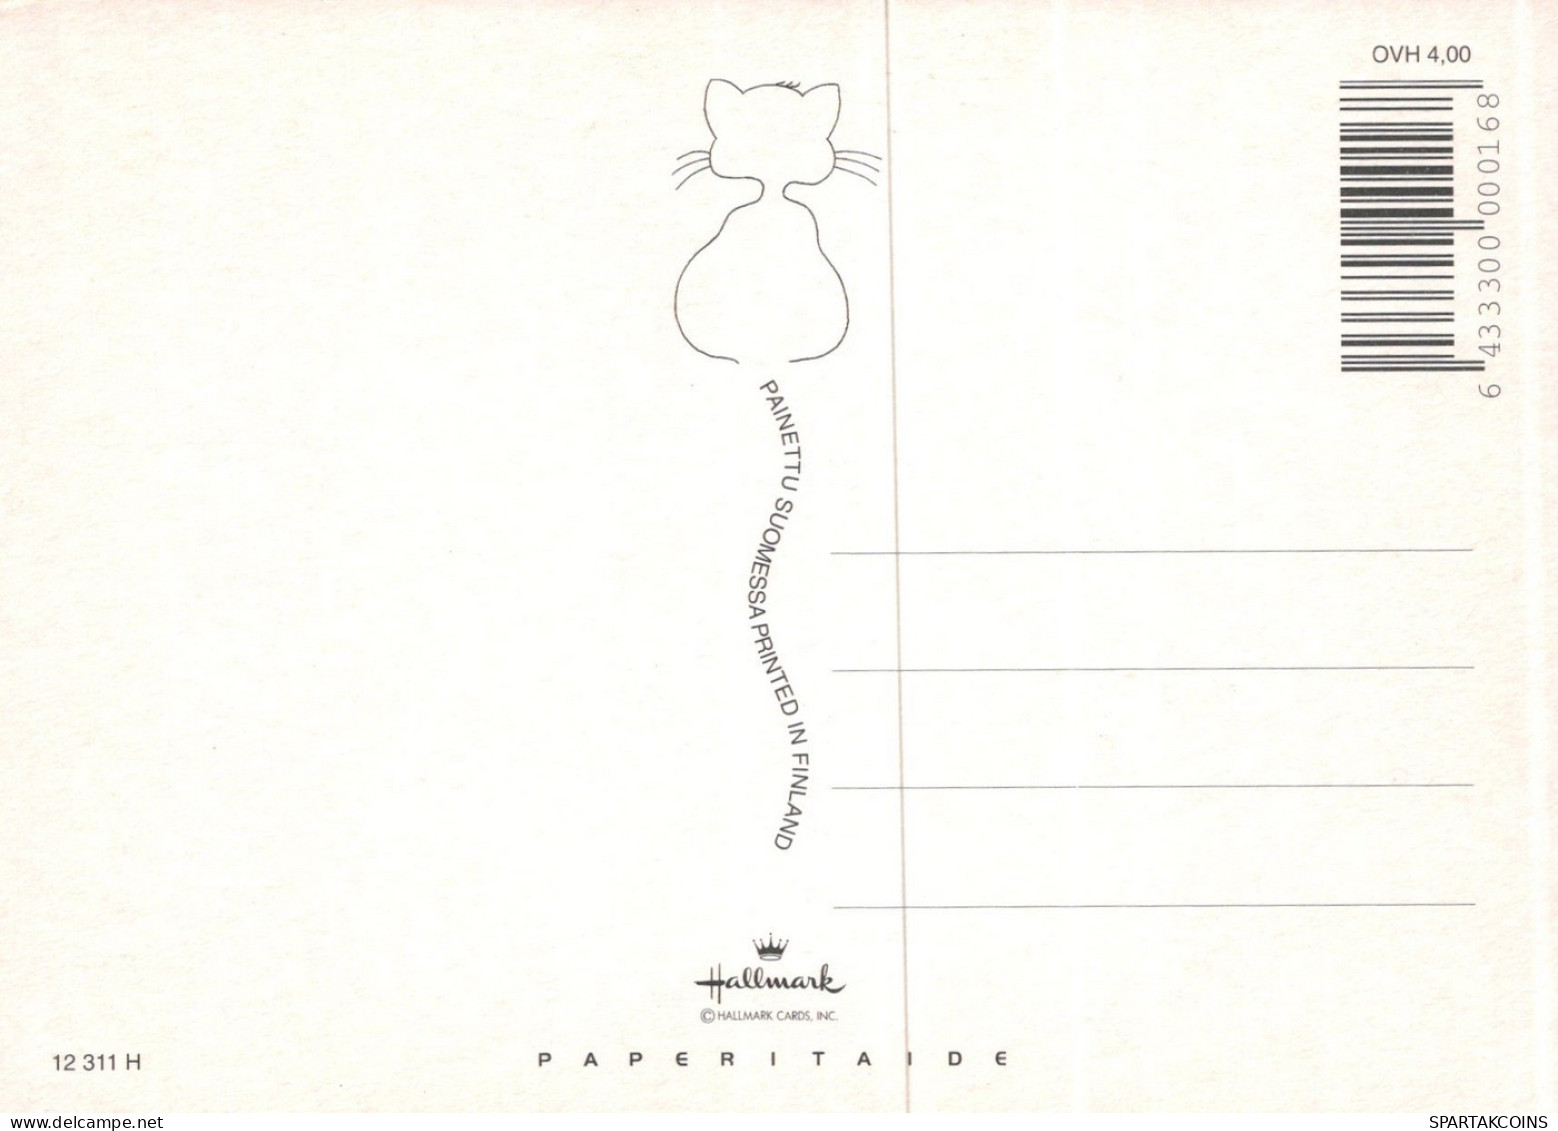 KATZE MIEZEKATZE Tier Vintage Ansichtskarte Postkarte CPSM Unposted #PAM140.A - Cats